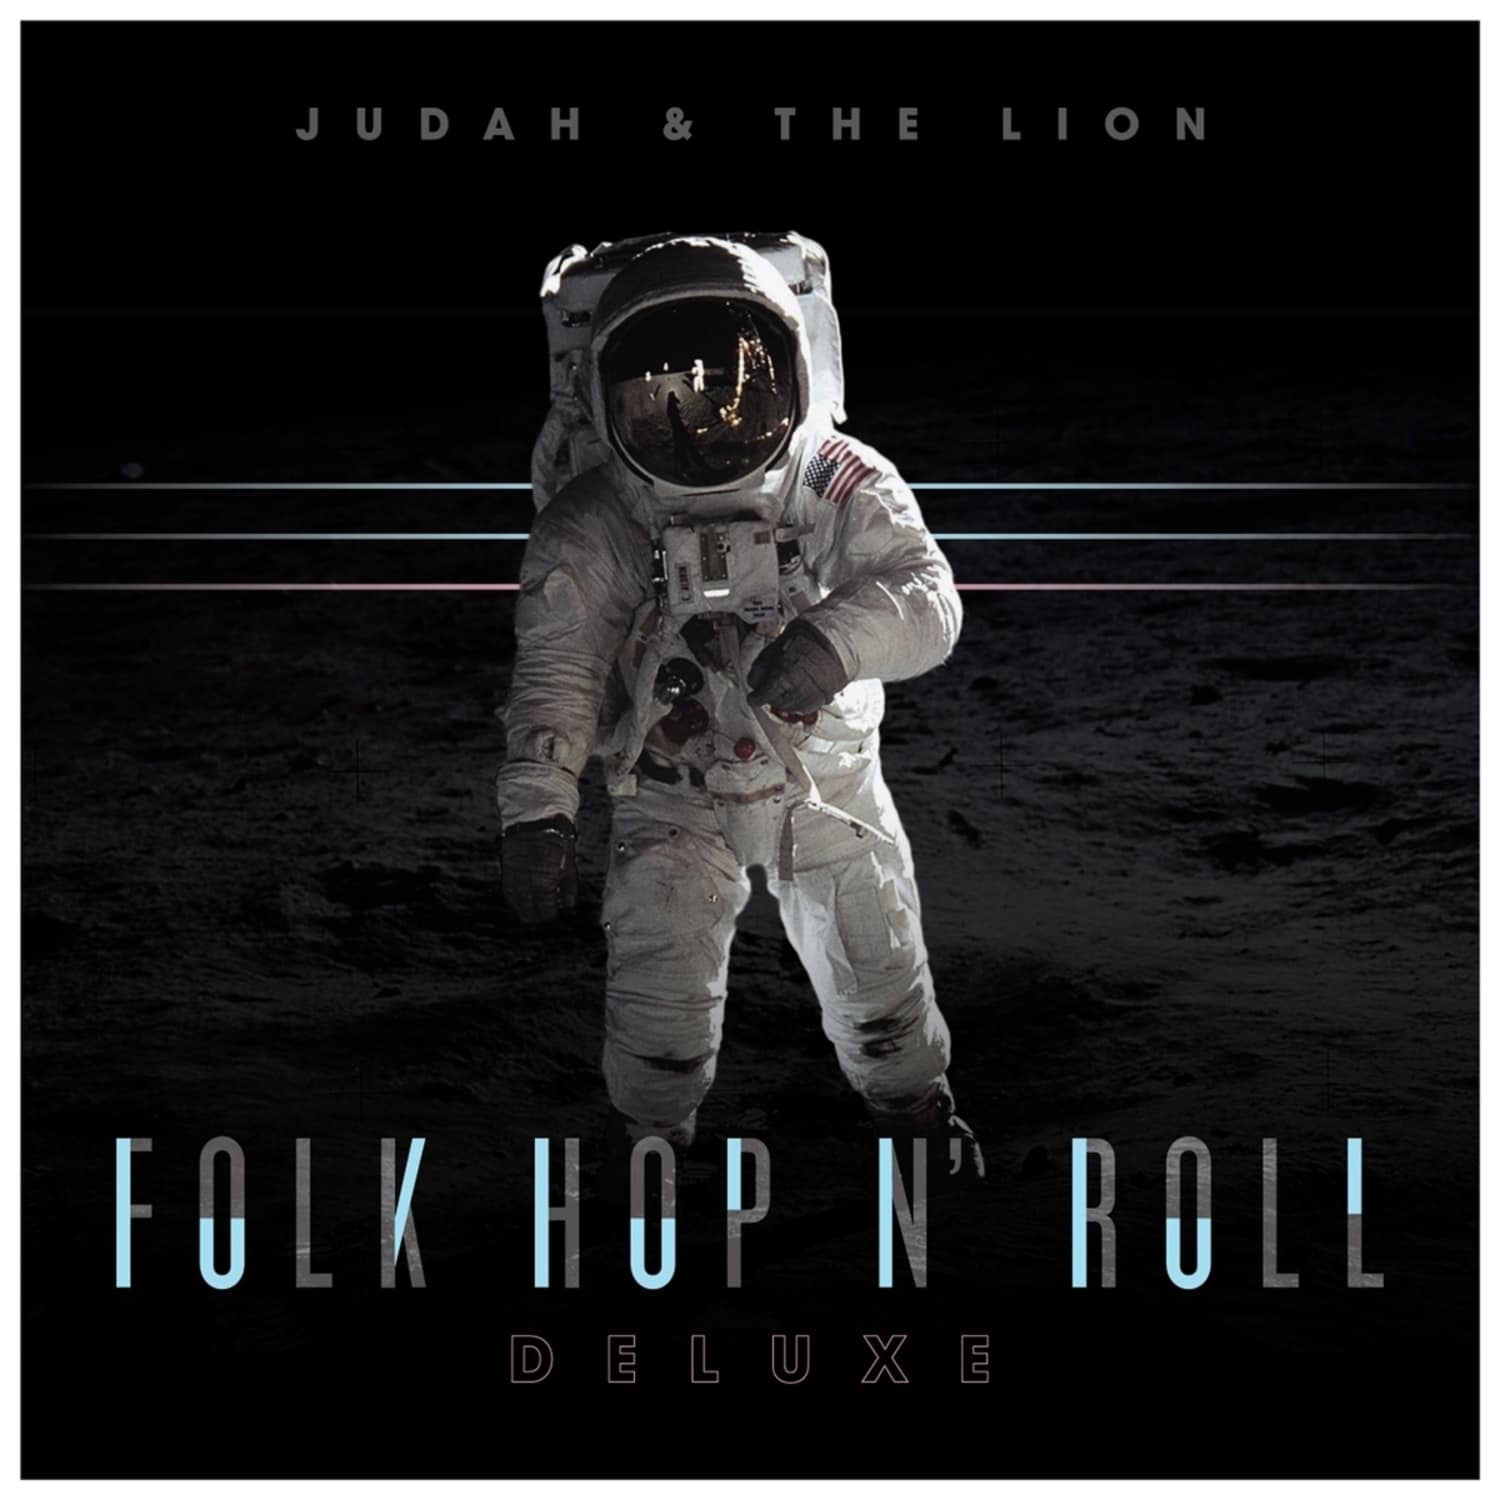 Judah & The Lion - FOLK HOP N ROLL 